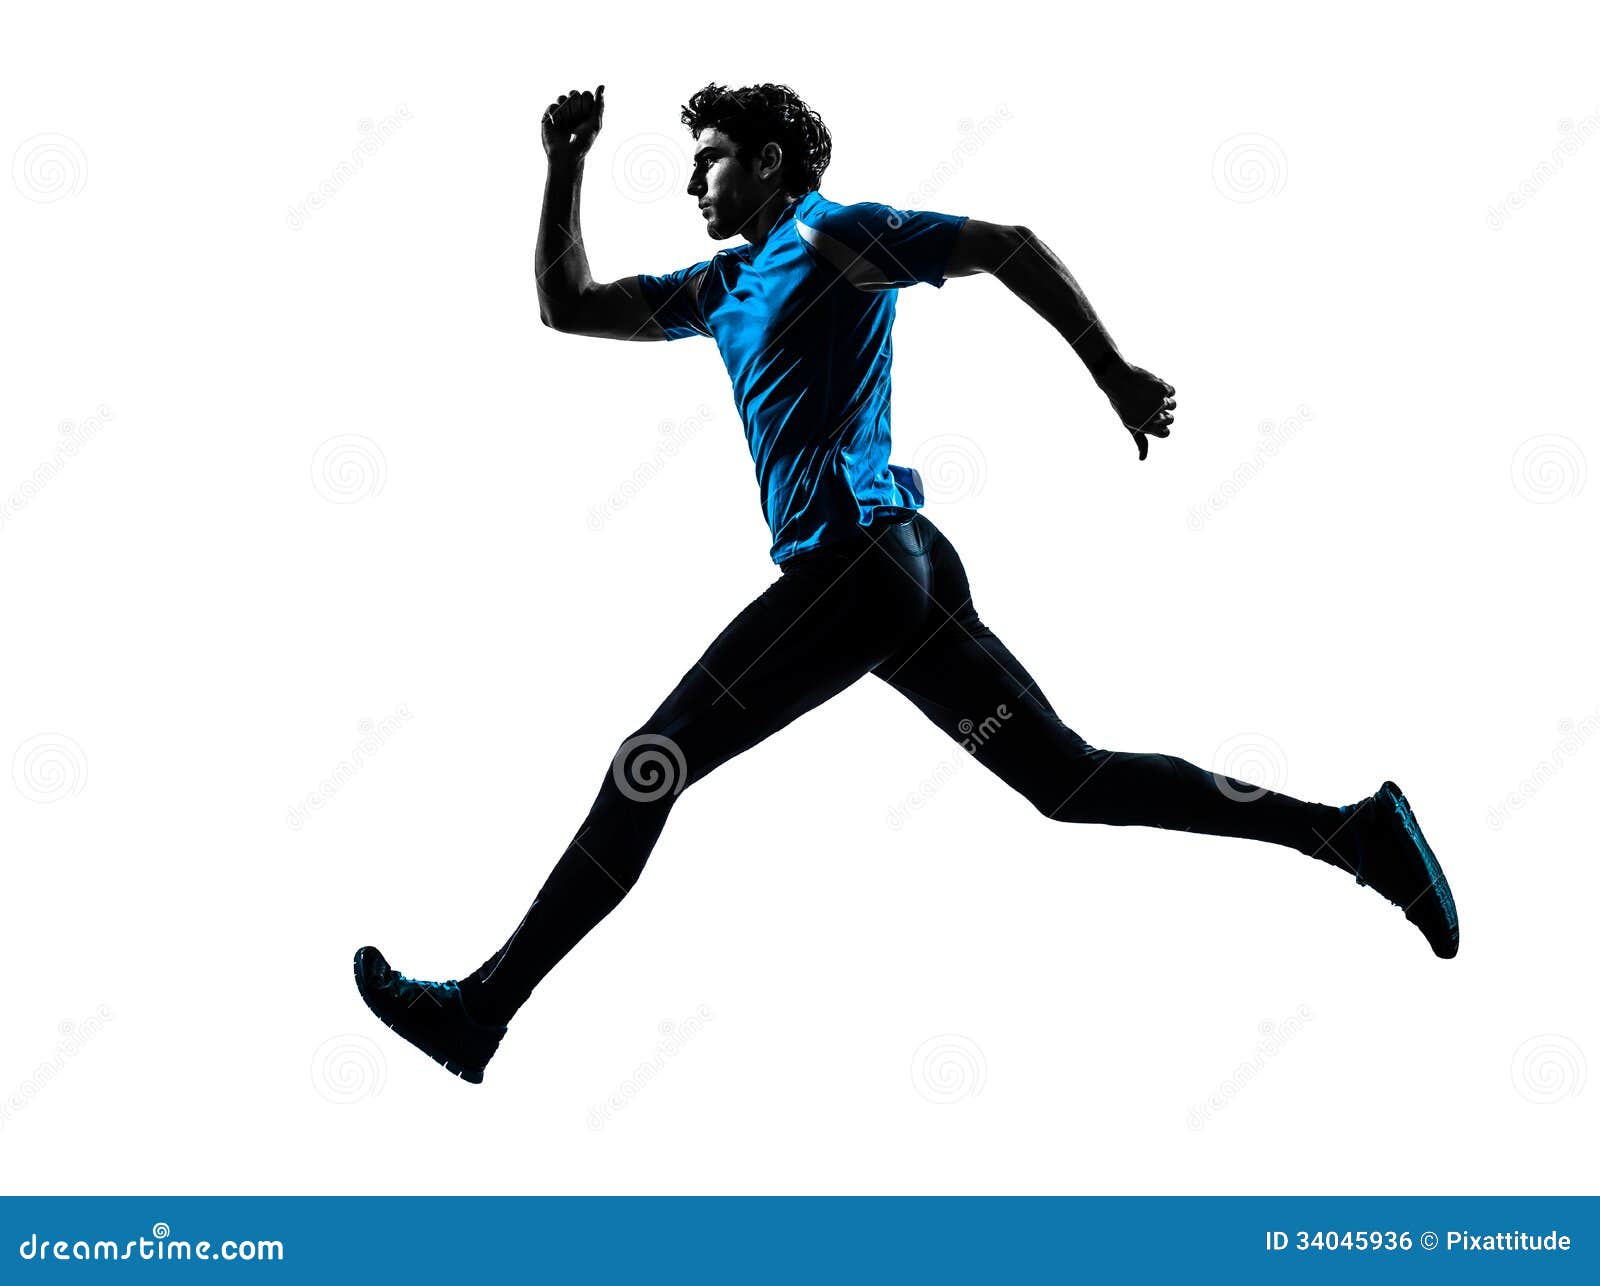 man jogging clipart - photo #43